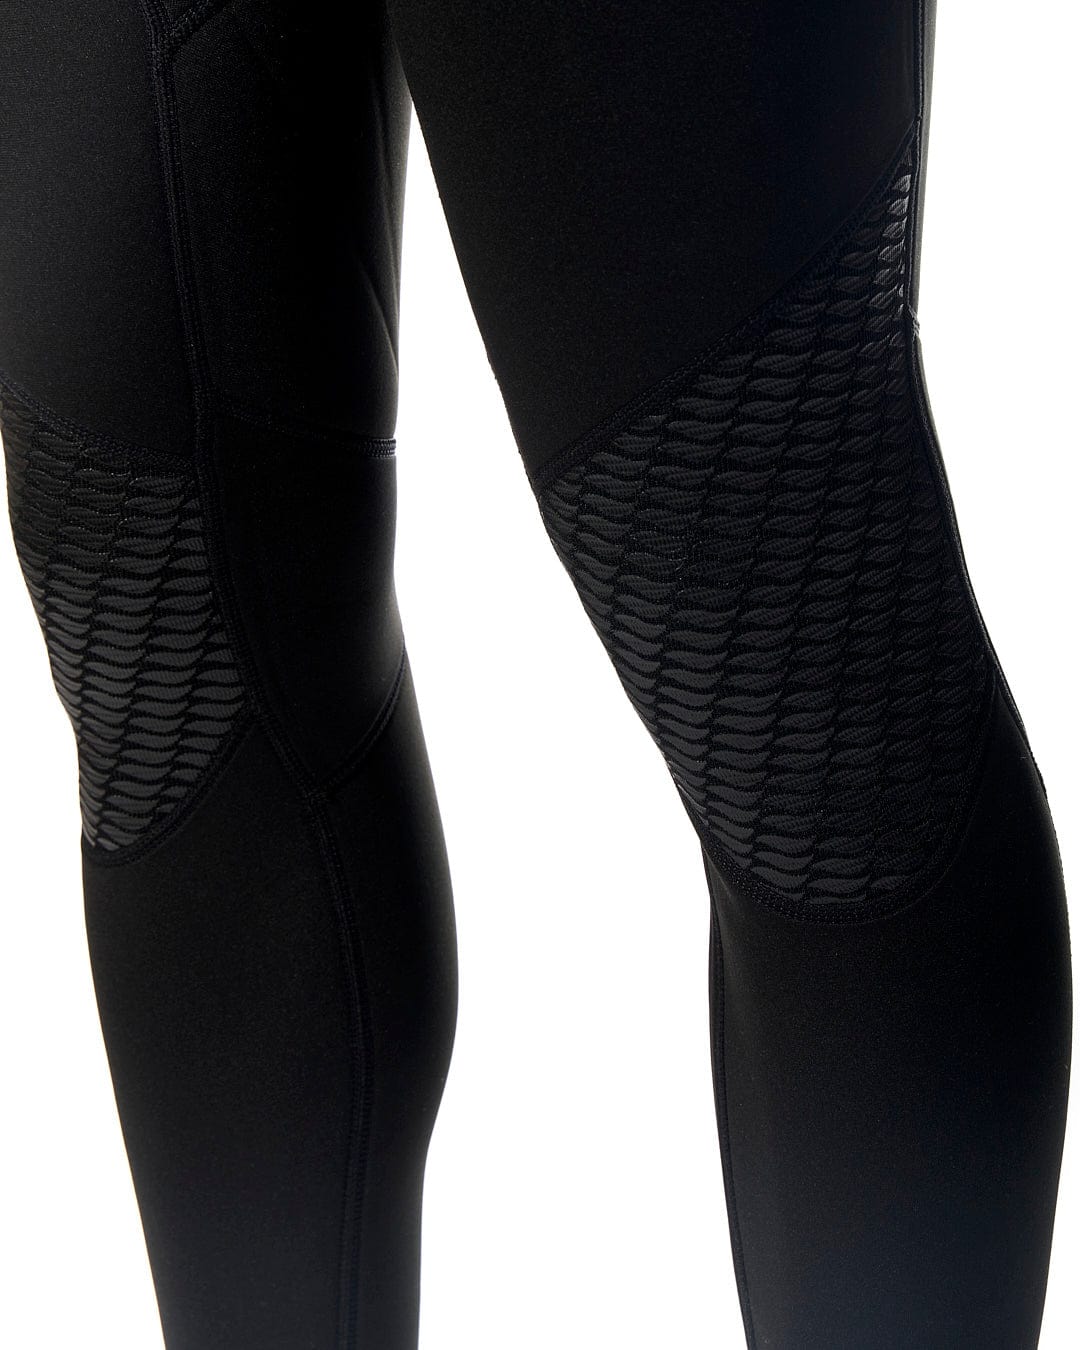 The legs of a man wearing Saltrock Core - Mens 3/2 Full Wetsuit - Blue/Black pants.